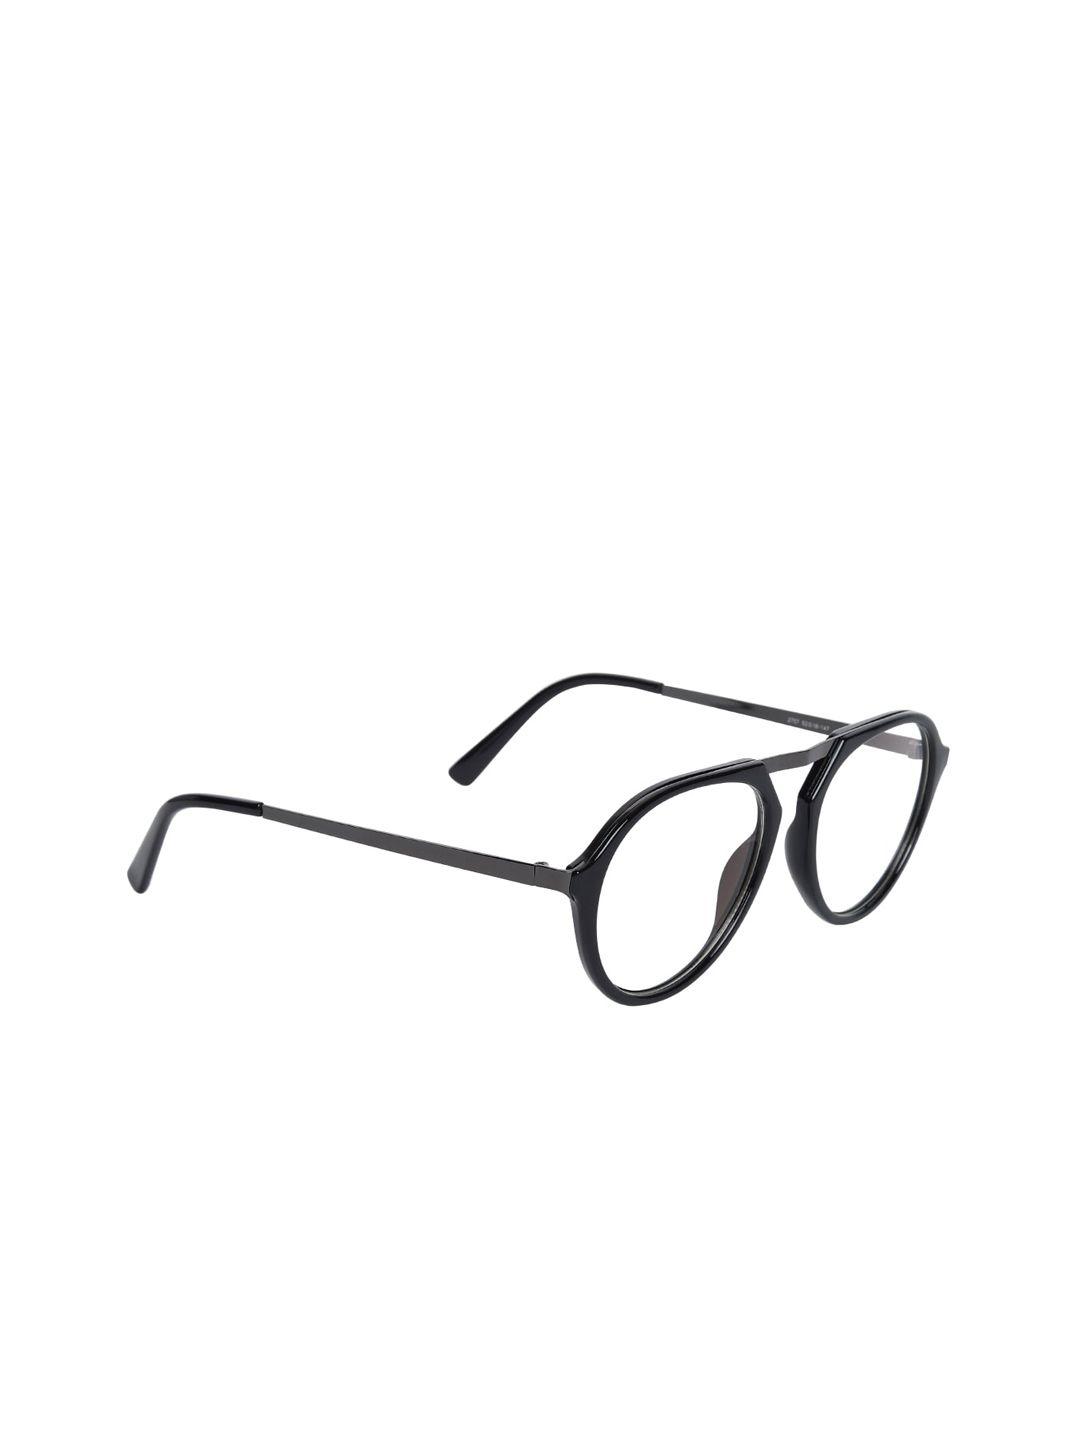 peter jones eyewear unisex solid anti glare lens full rim optical round frames 2707b